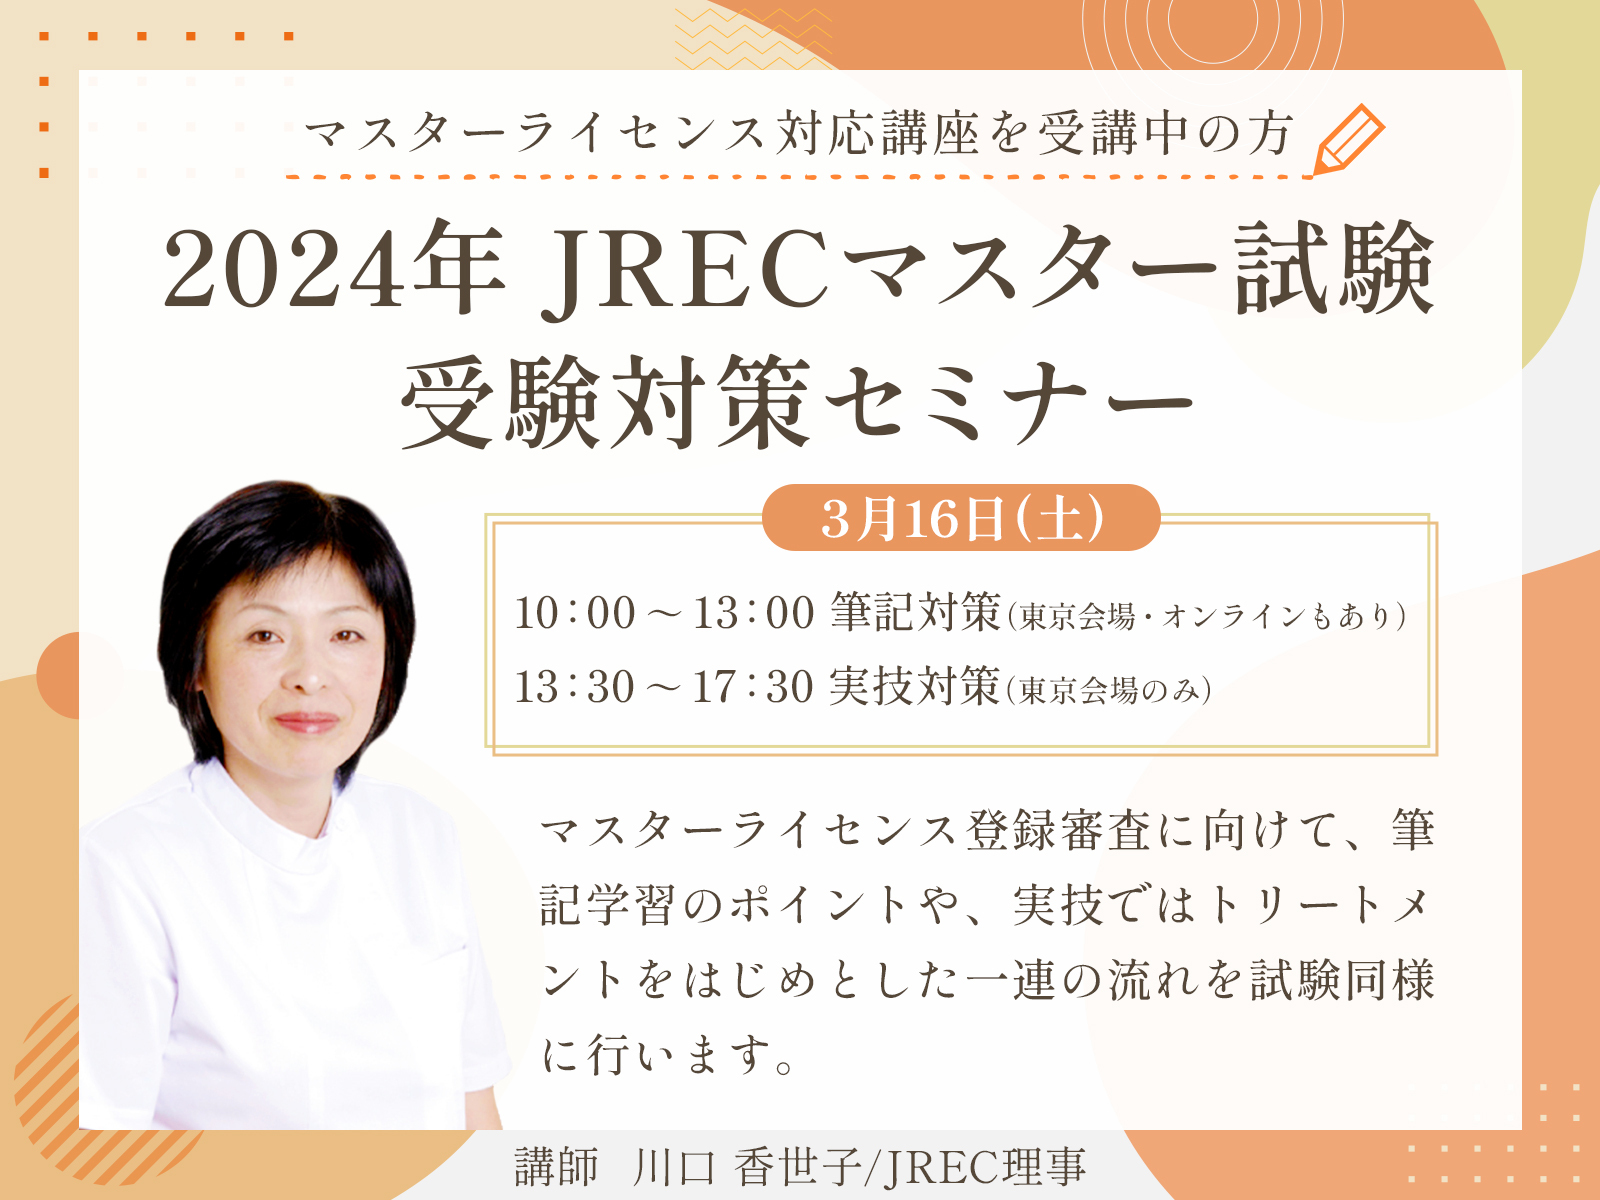 JREC マスター試験 受験対策セミナー